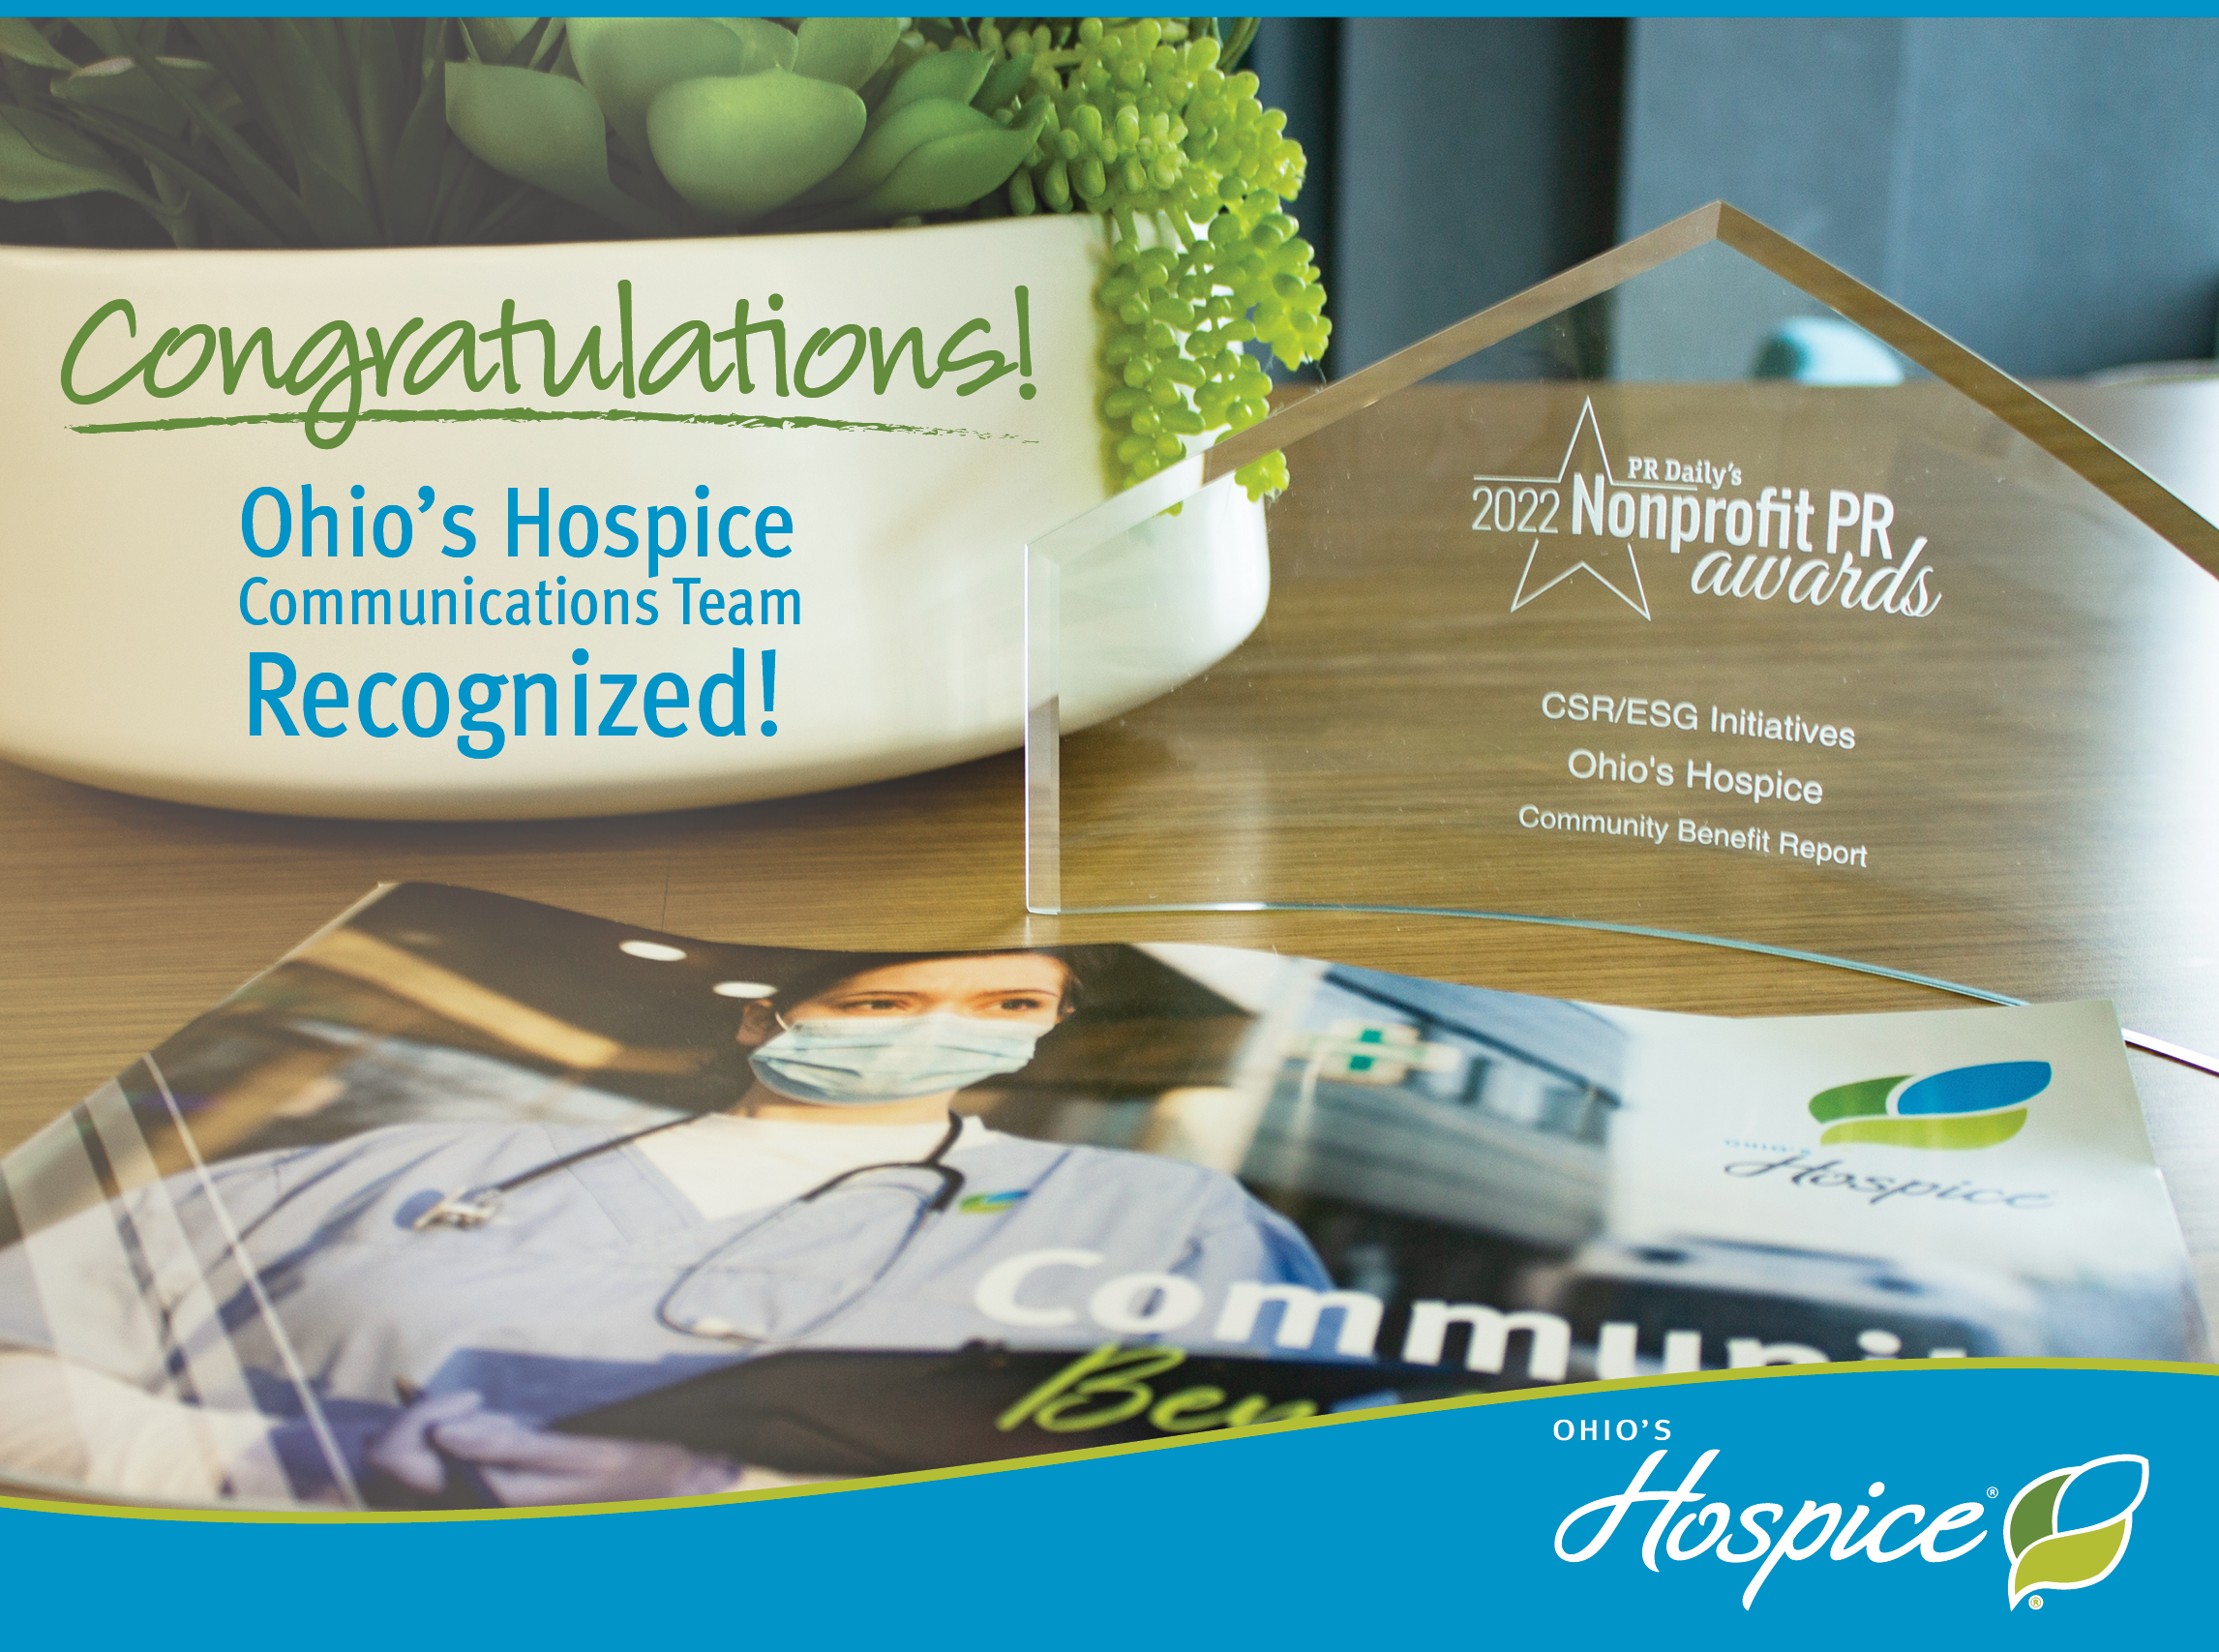 Congratulations! Ohio's Hospice Communications Team Recognized! 2022 PR Daily's Nonprofit PR Awards: CSR/ESG Initiatives: Ohio's Hospice: Community Benefit Report